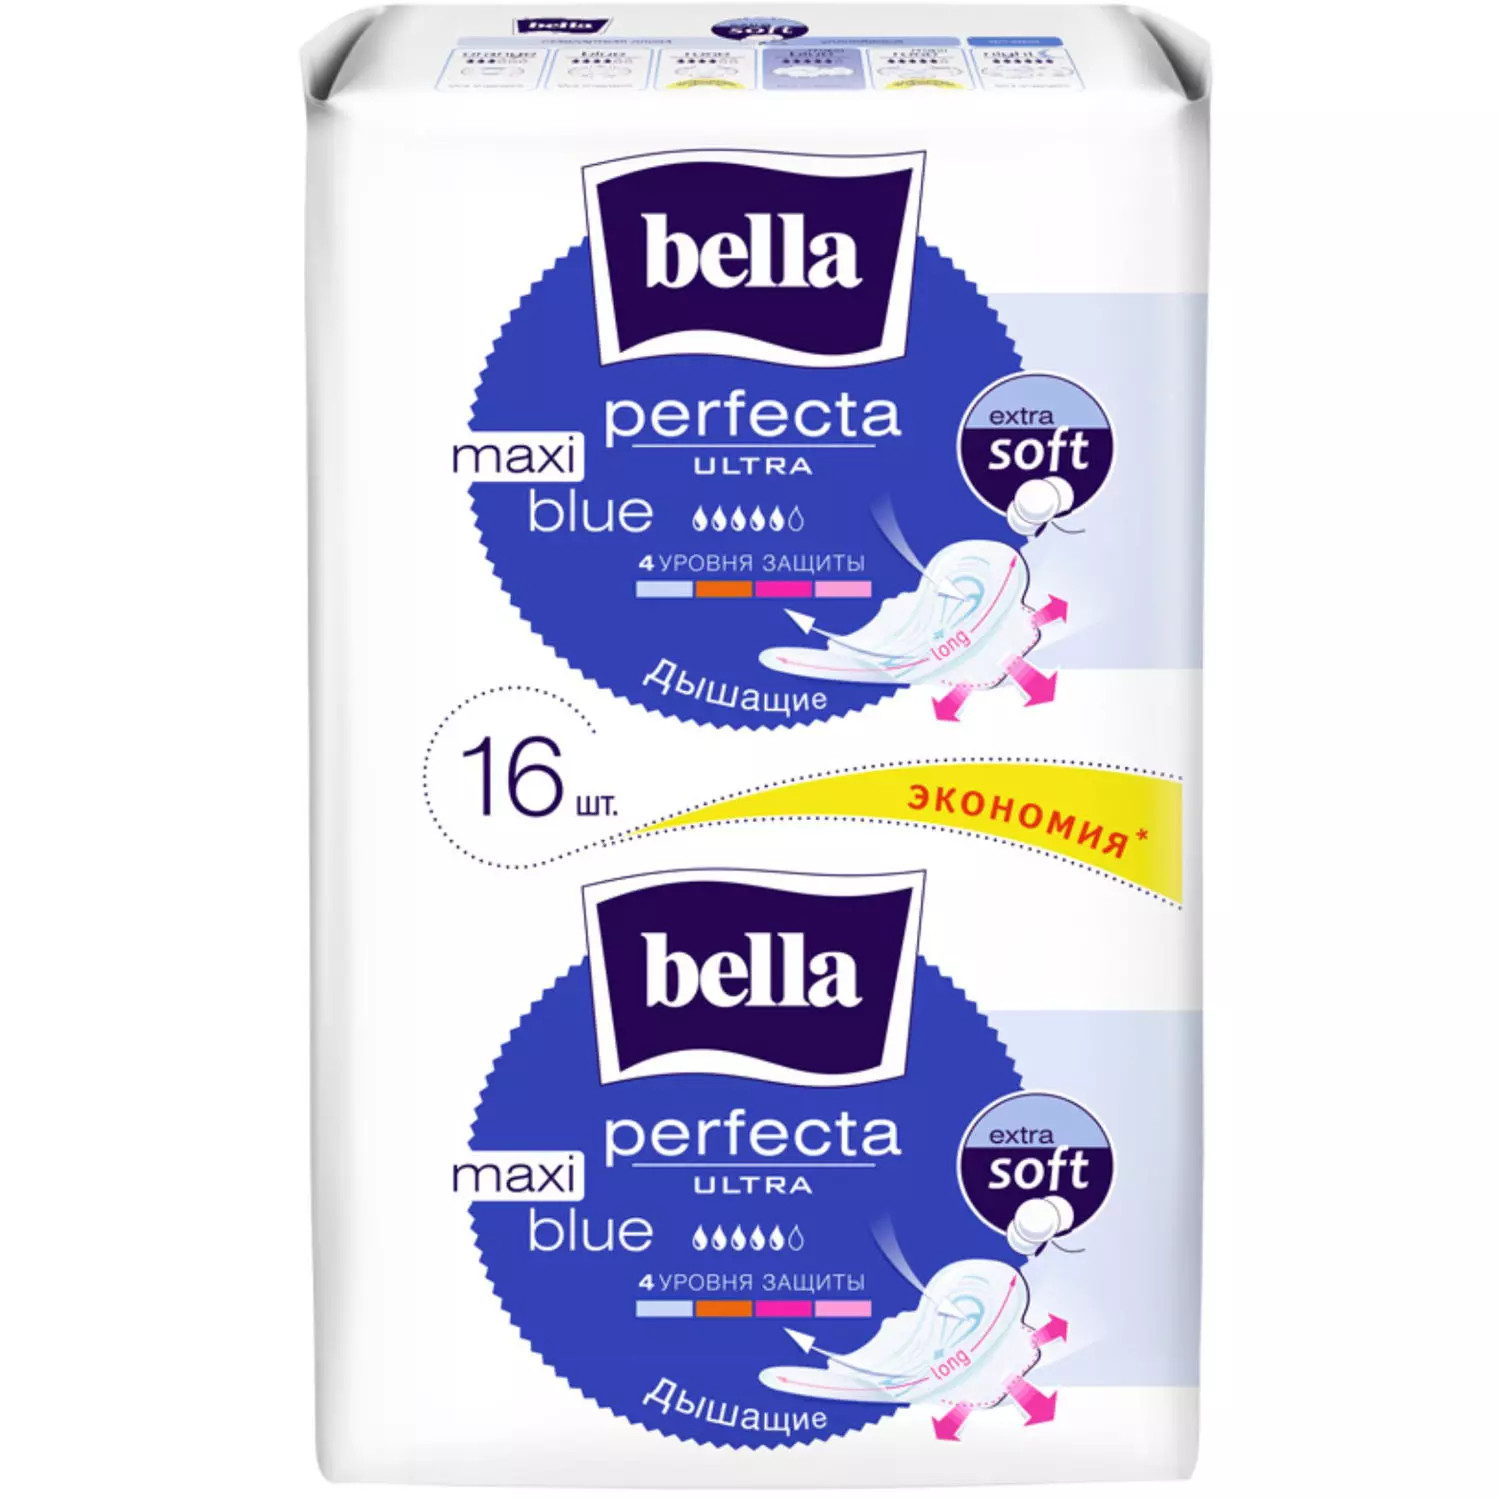 Прокладки Bella Perfecta ultra maxi blue 16 шт. прокладки женские bella perfecta ultra rose ежедневные 20 шт be 013 rw20 205